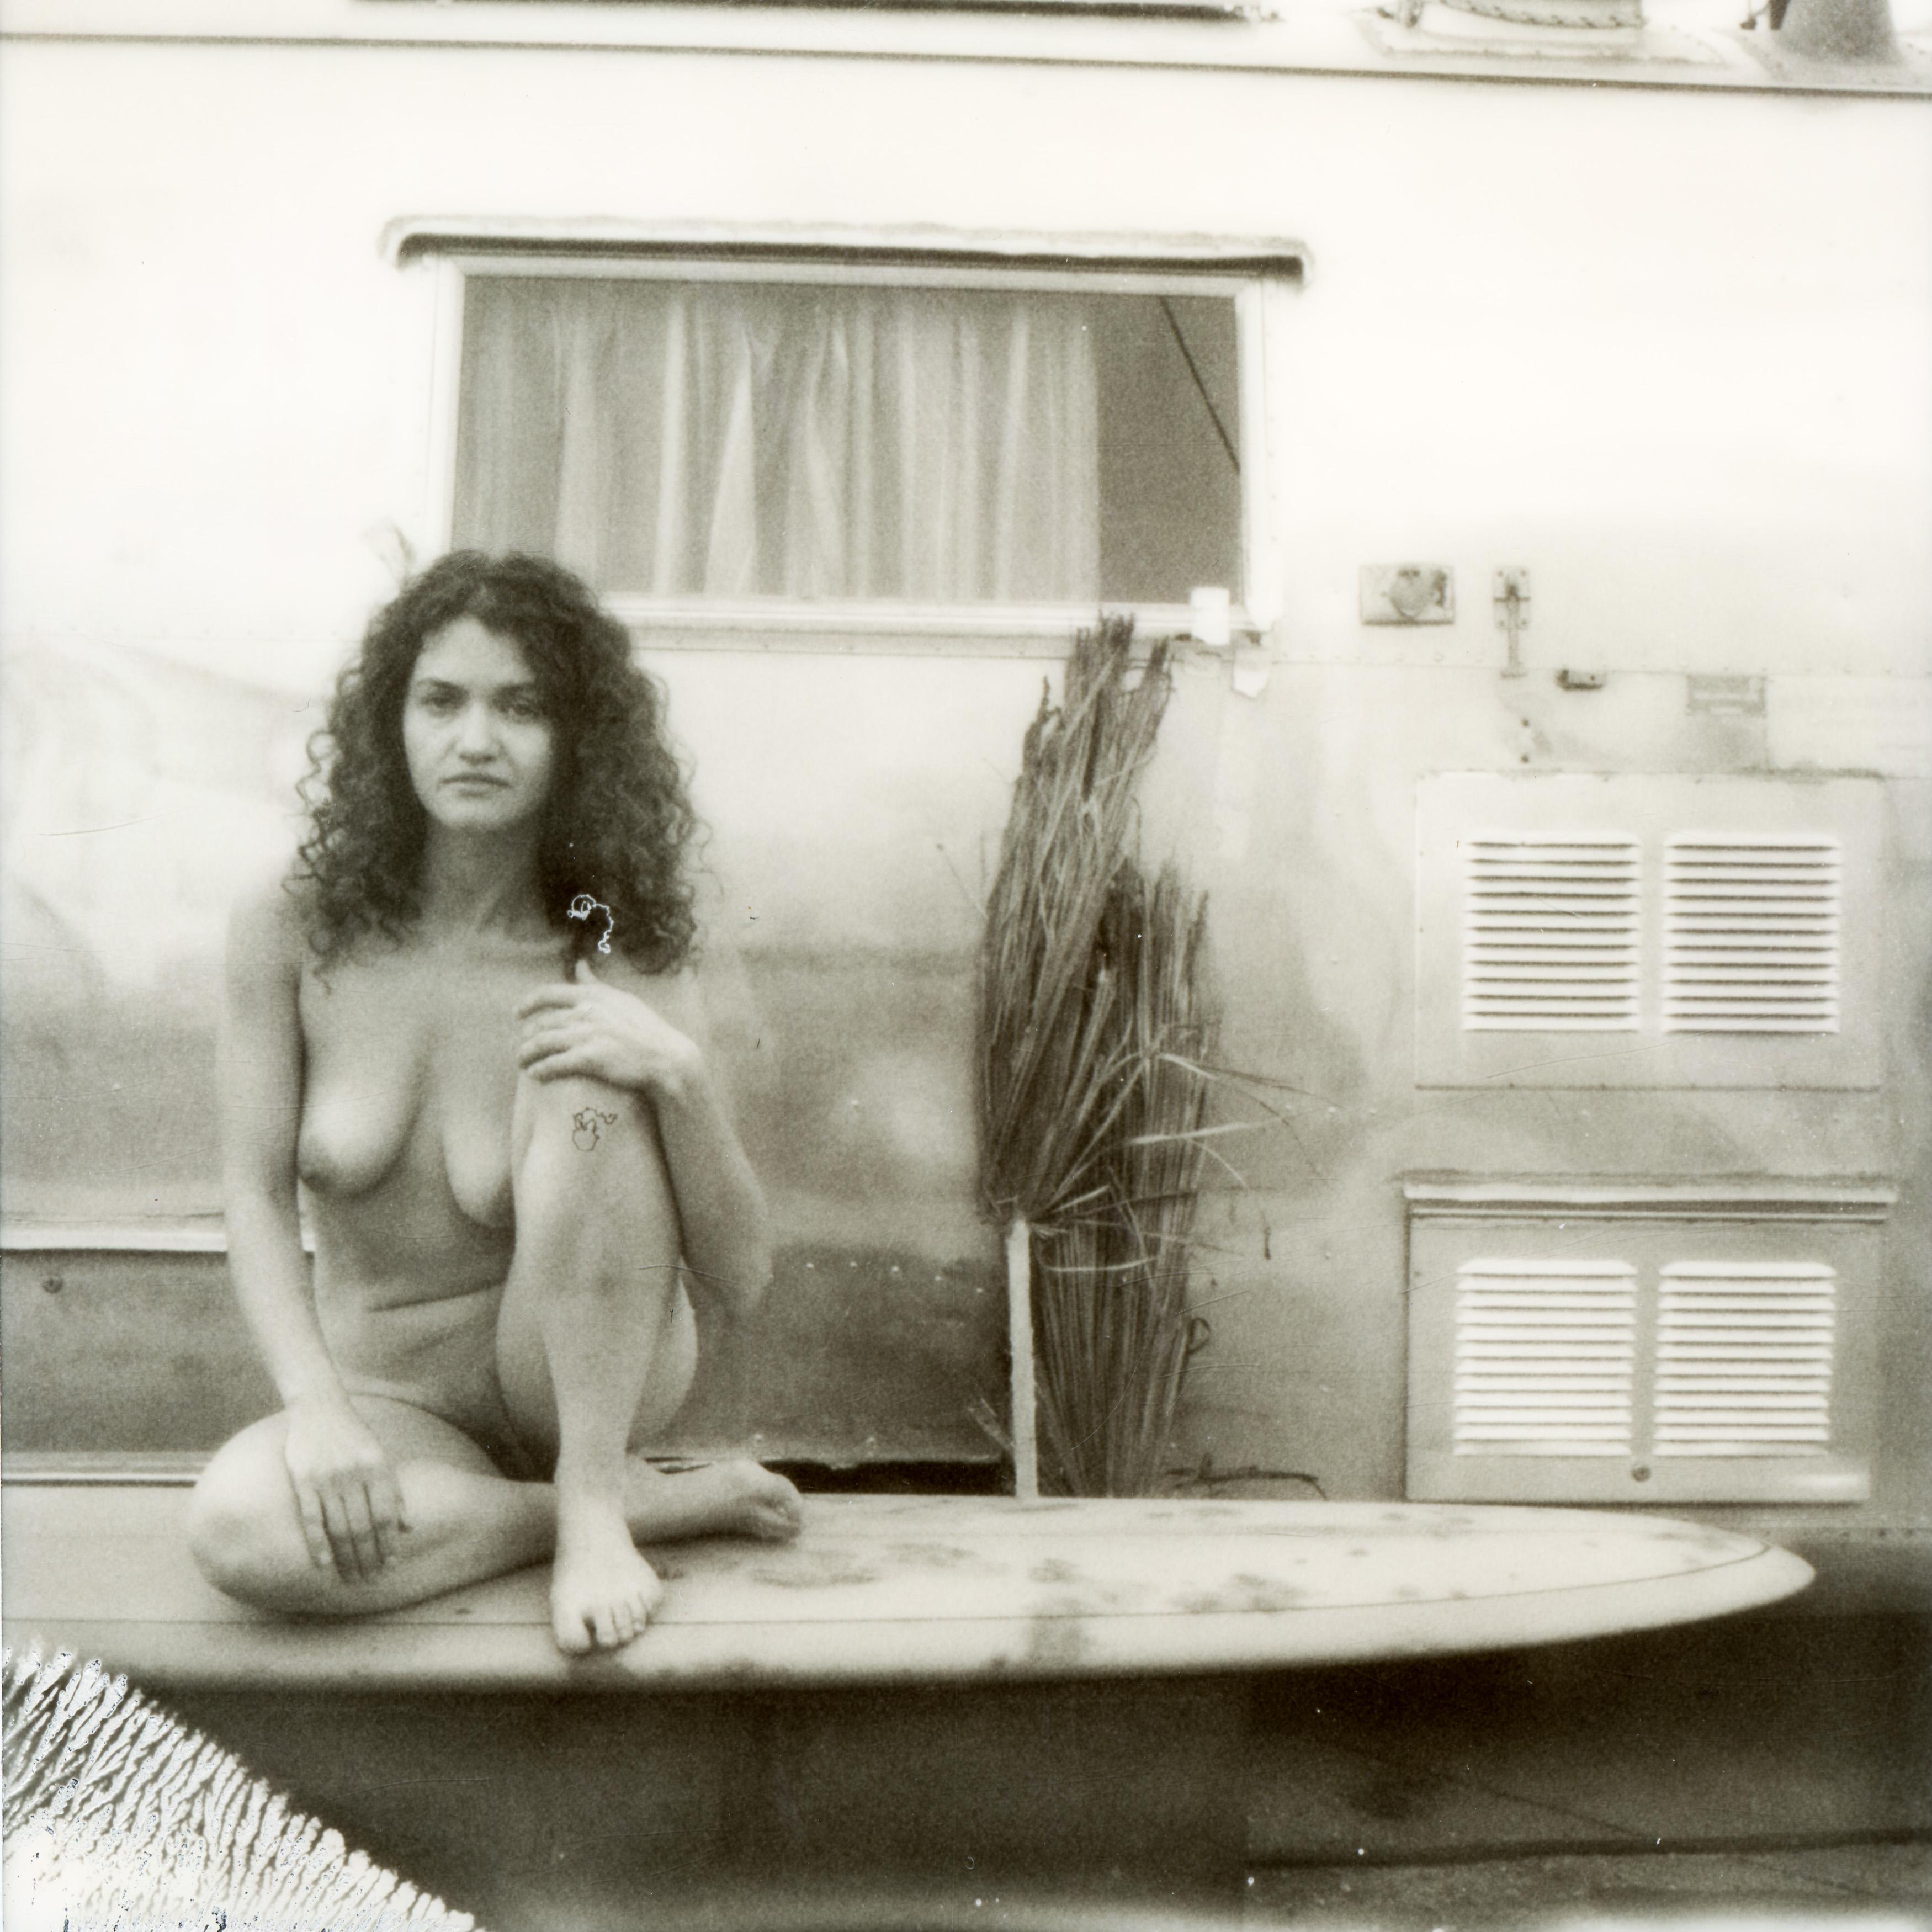 Kirsten Thys van den Audenaerde Nude Photograph - Breeze  - Contemporary, Nude, Women, Polaroid, 21st Century